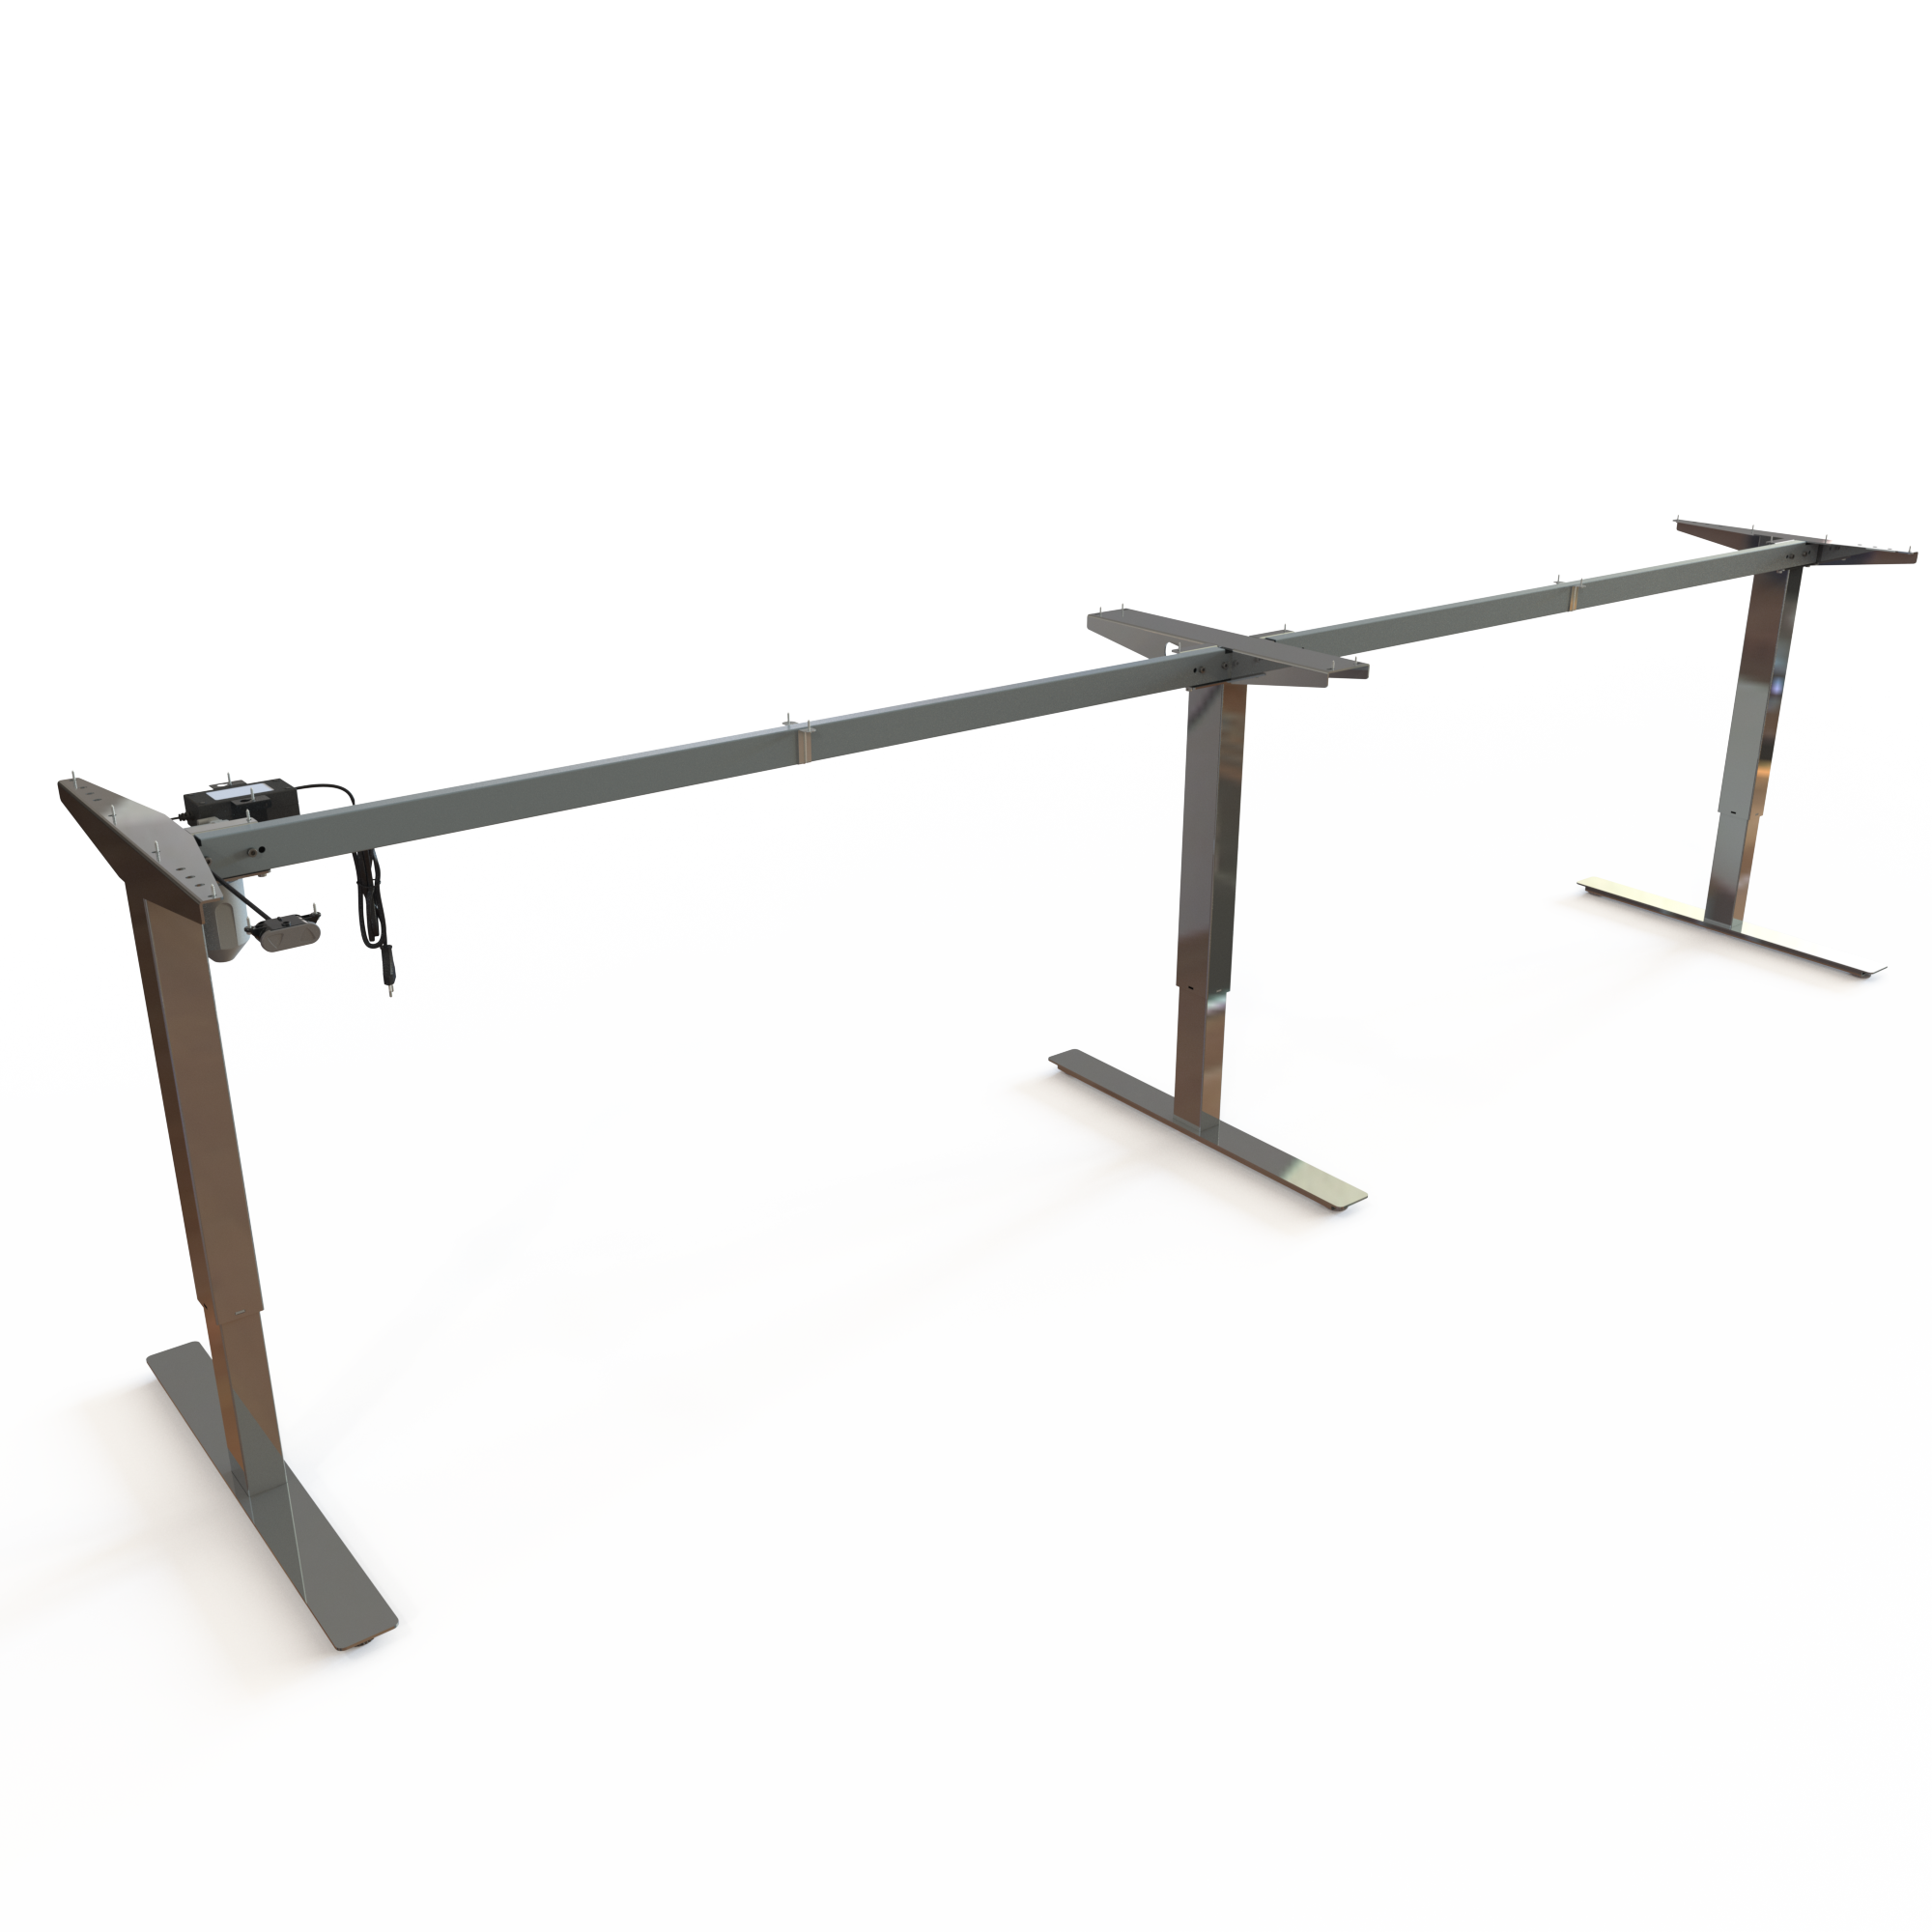 Electric Desk FrameElectric Desk Frame | WidthWidth 342 cmcm | Chrome